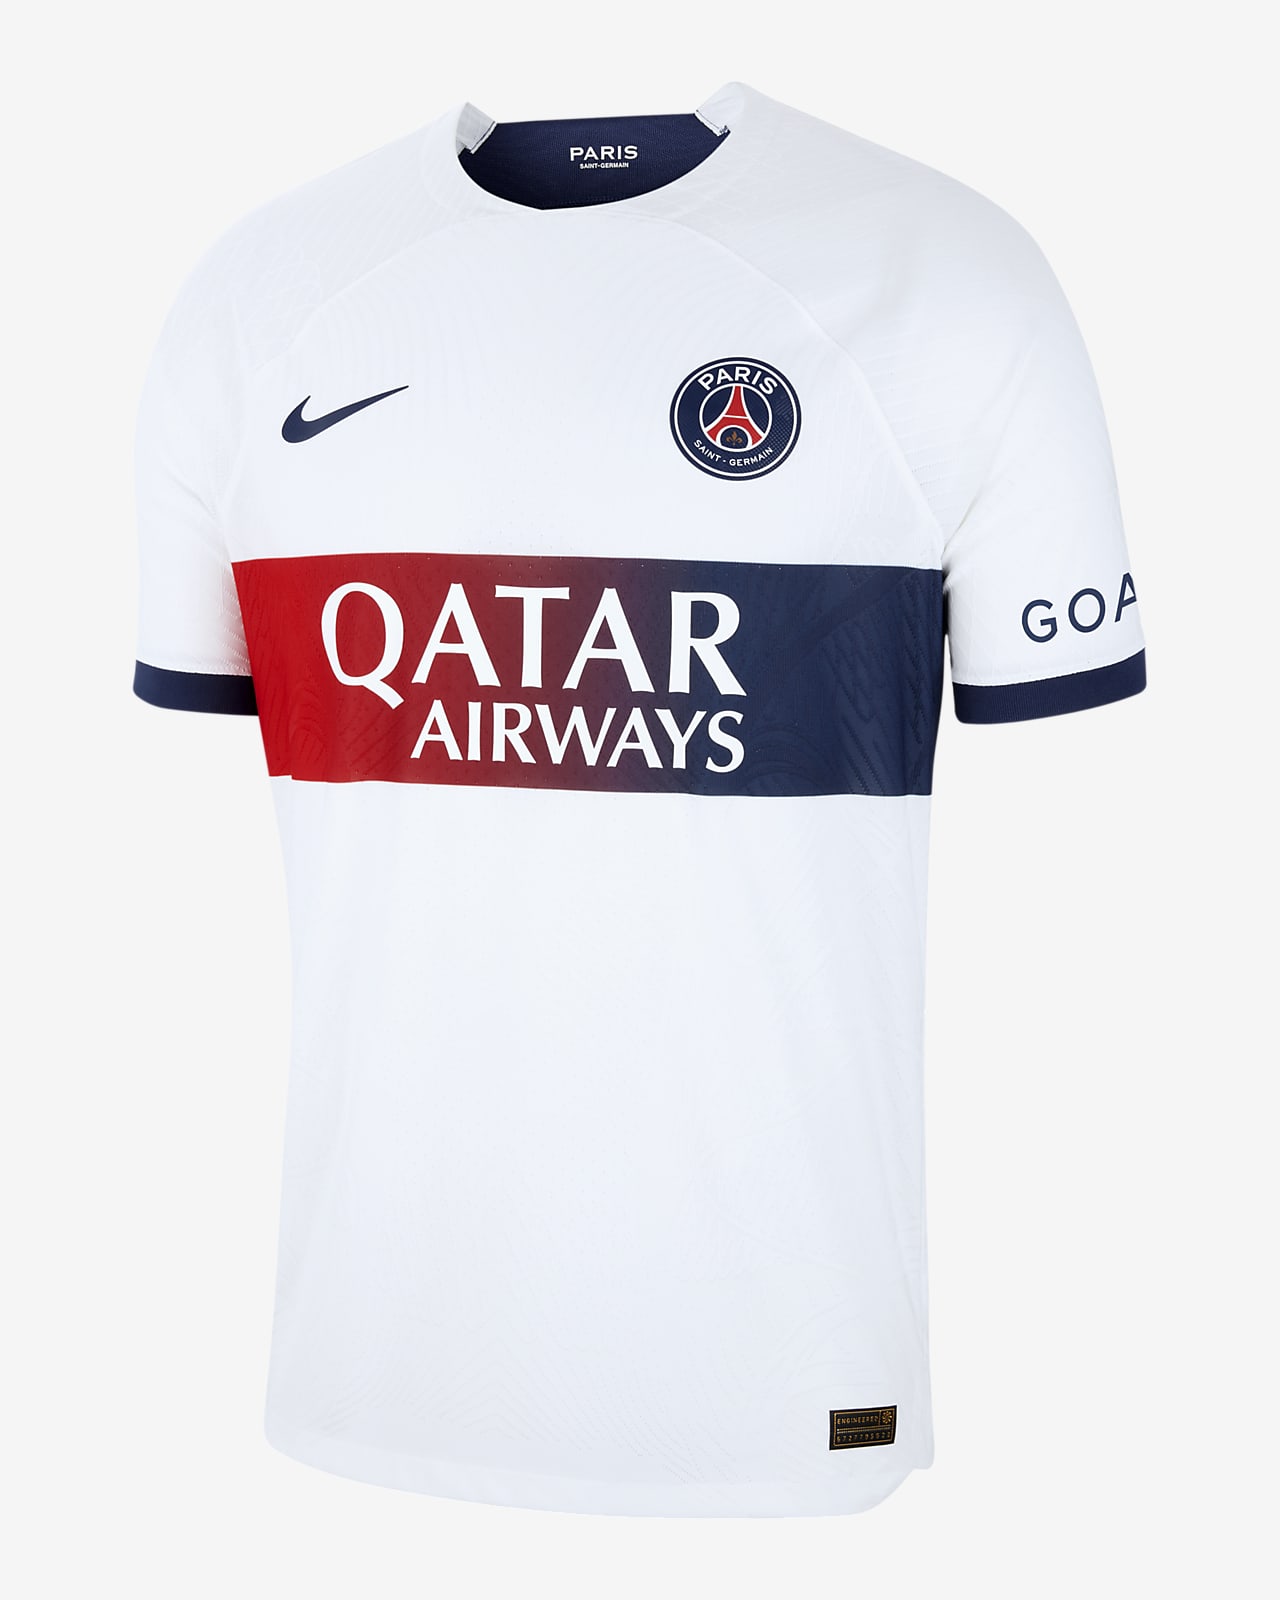 Paris Saint-Germain Jerseys, Apparel & Gear.